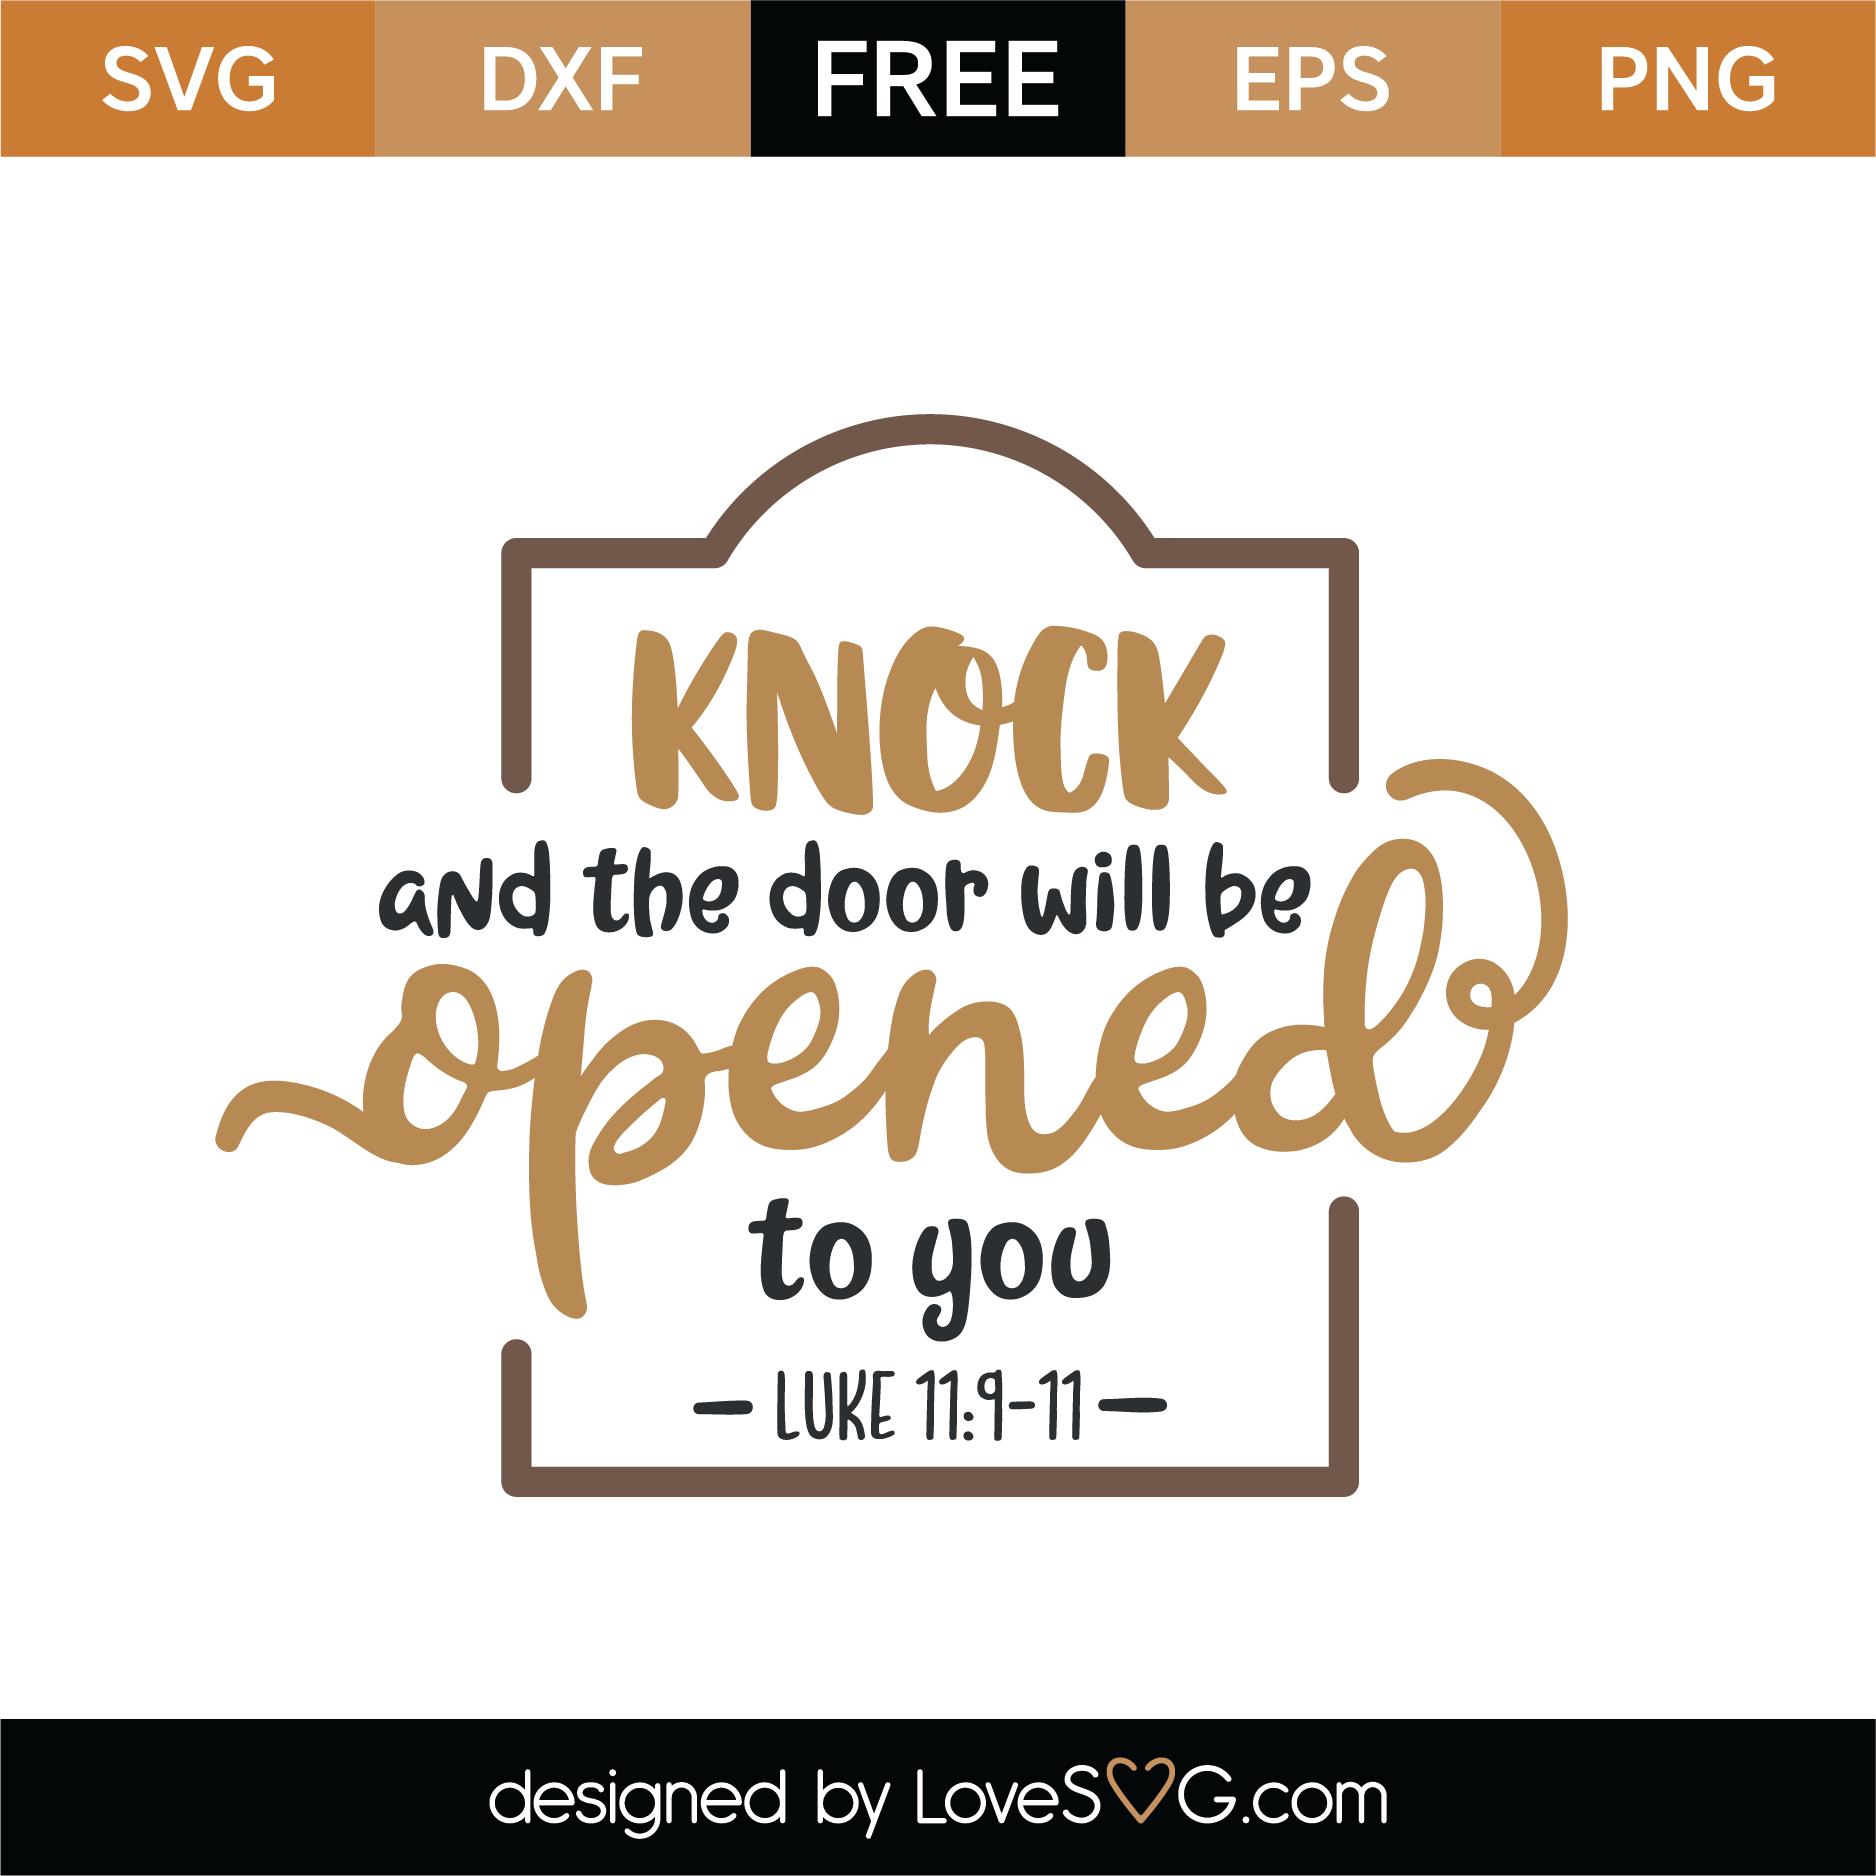 Download Free Luke 11:9-11 SVG Cut File | Lovesvg.com